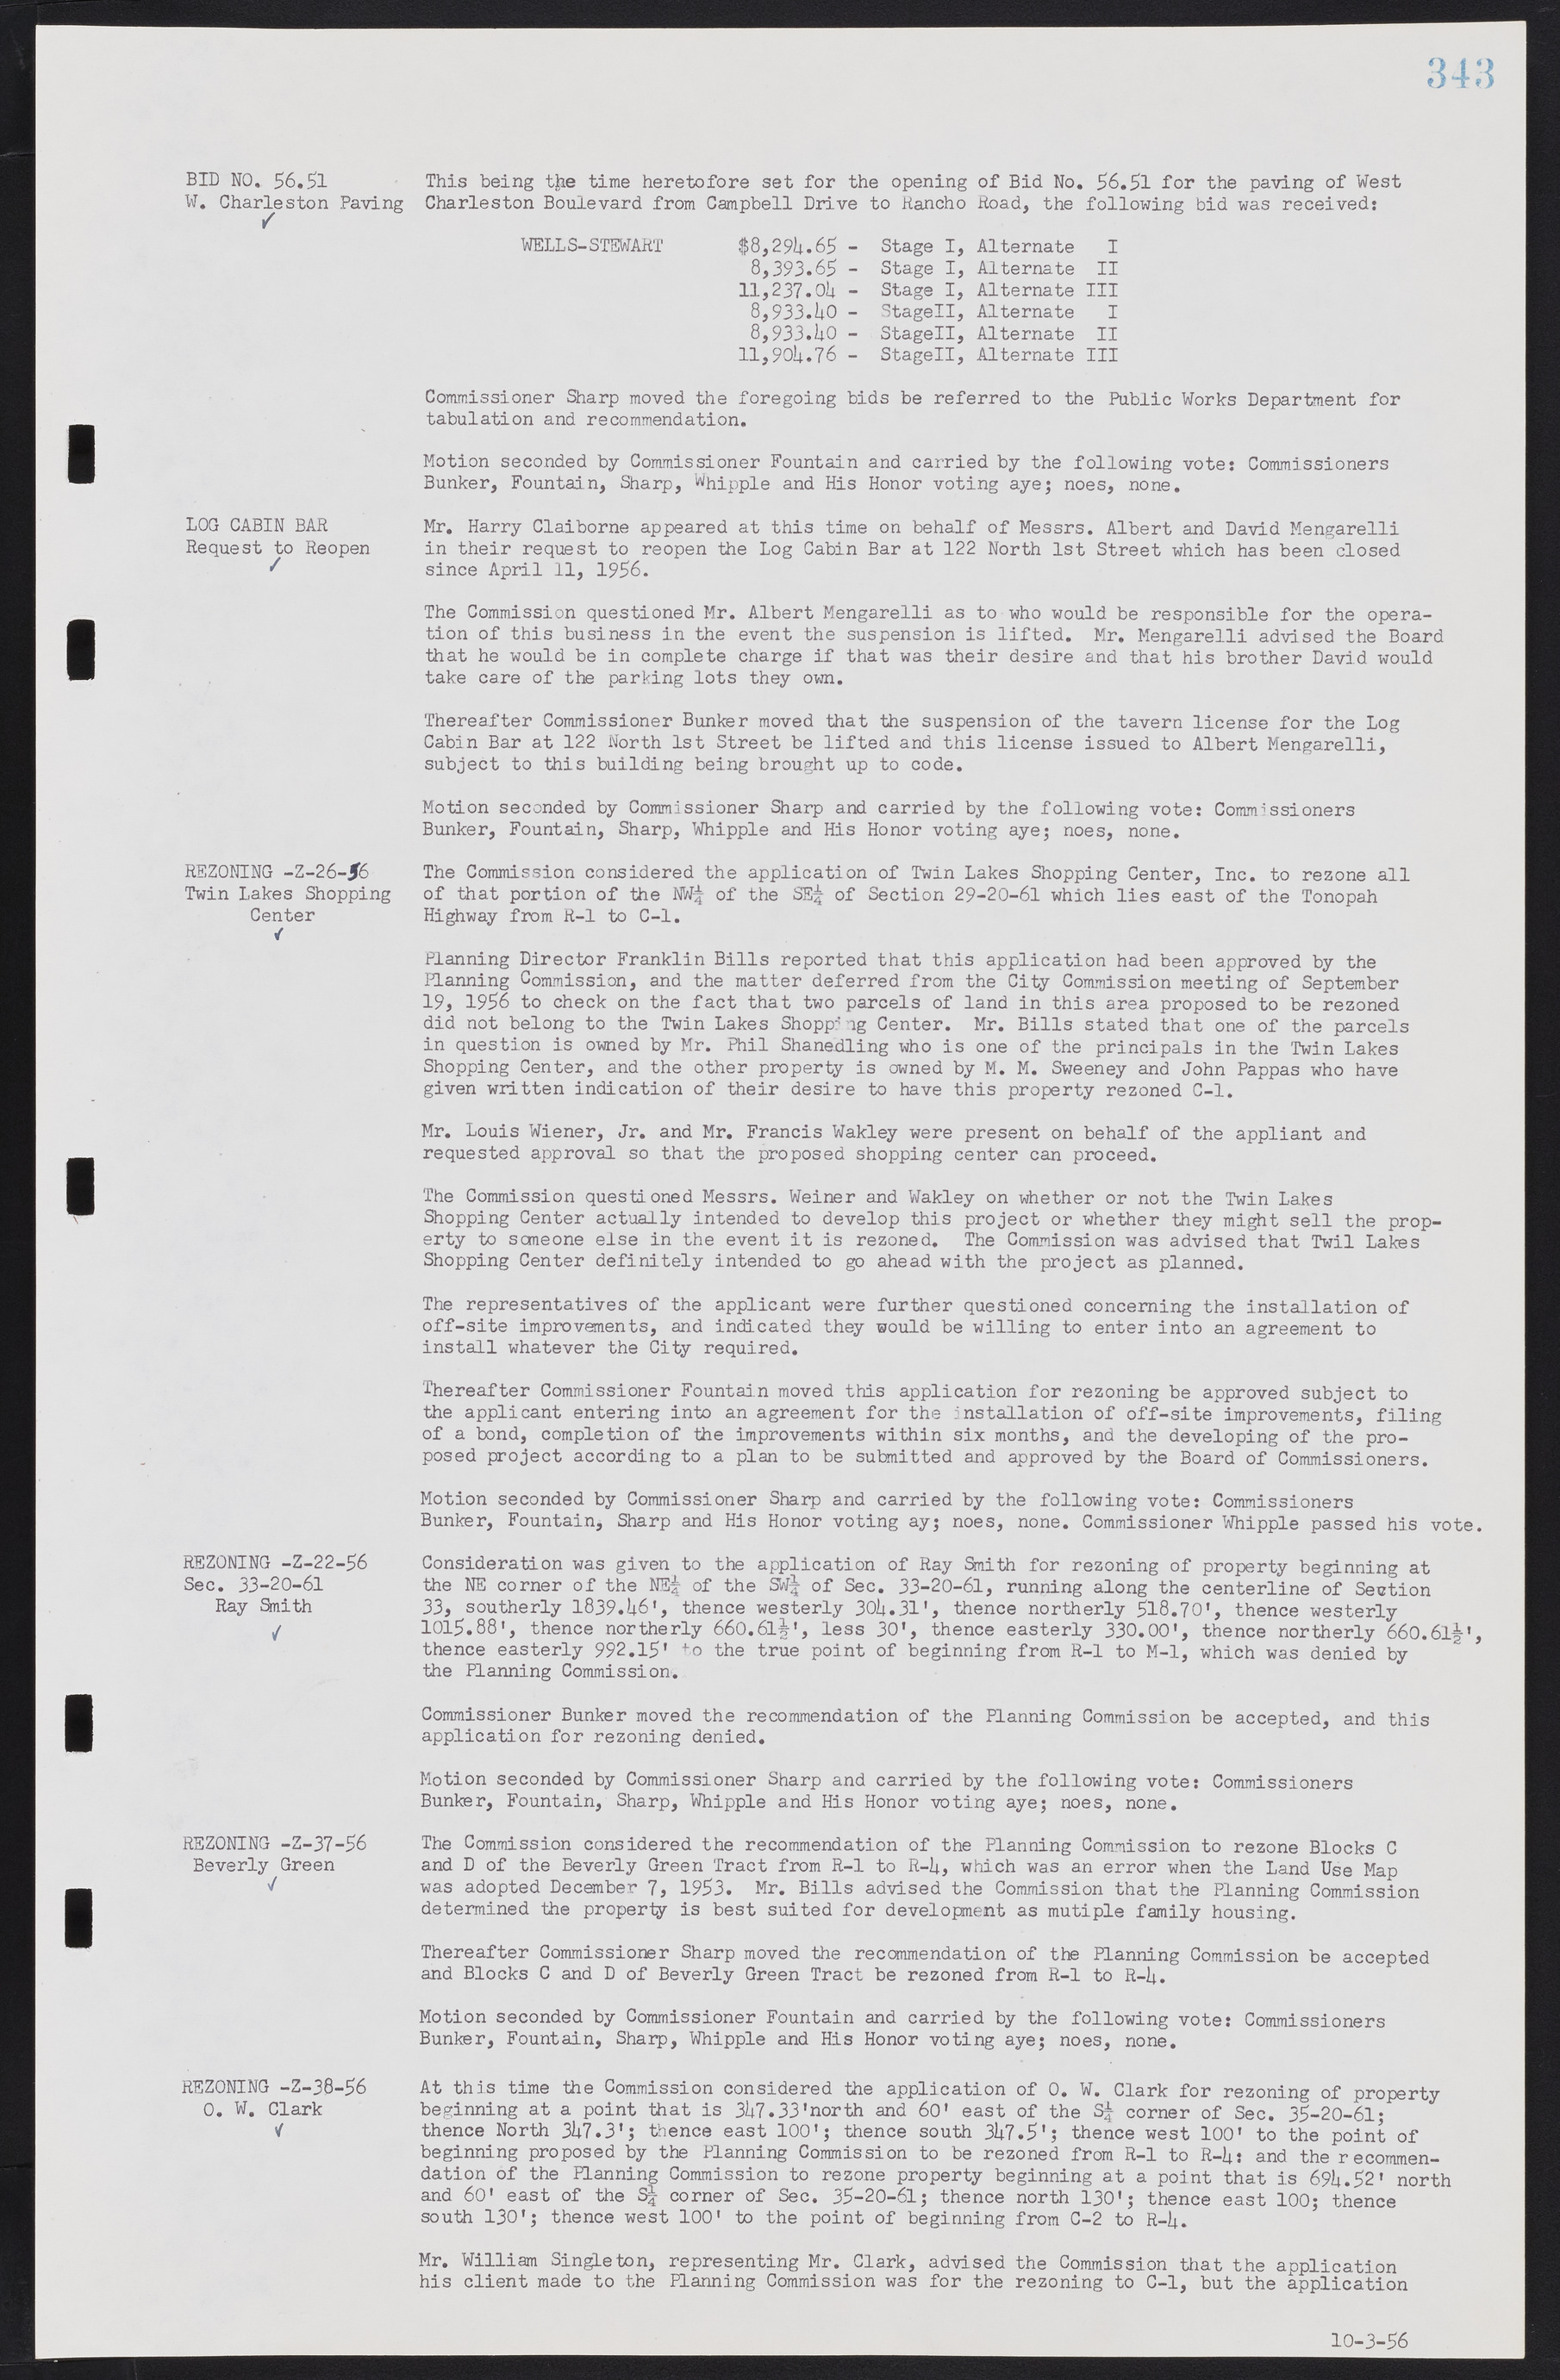 Las Vegas City Commission Minutes, September 21, 1955 to November 20, 1957, lvc000010-363